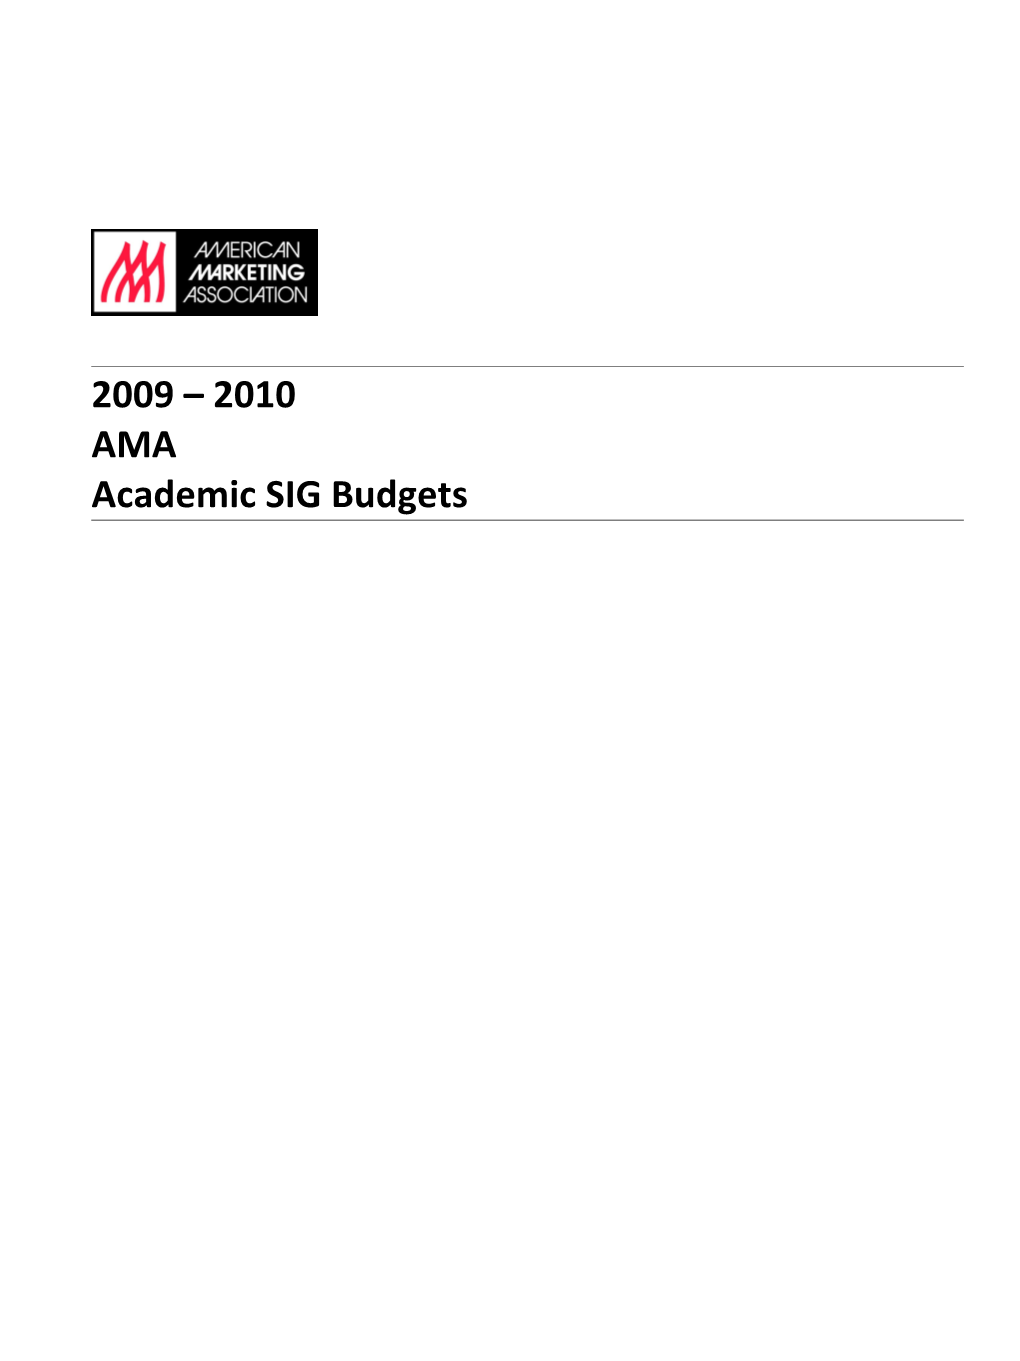 Academic SIG Budgets